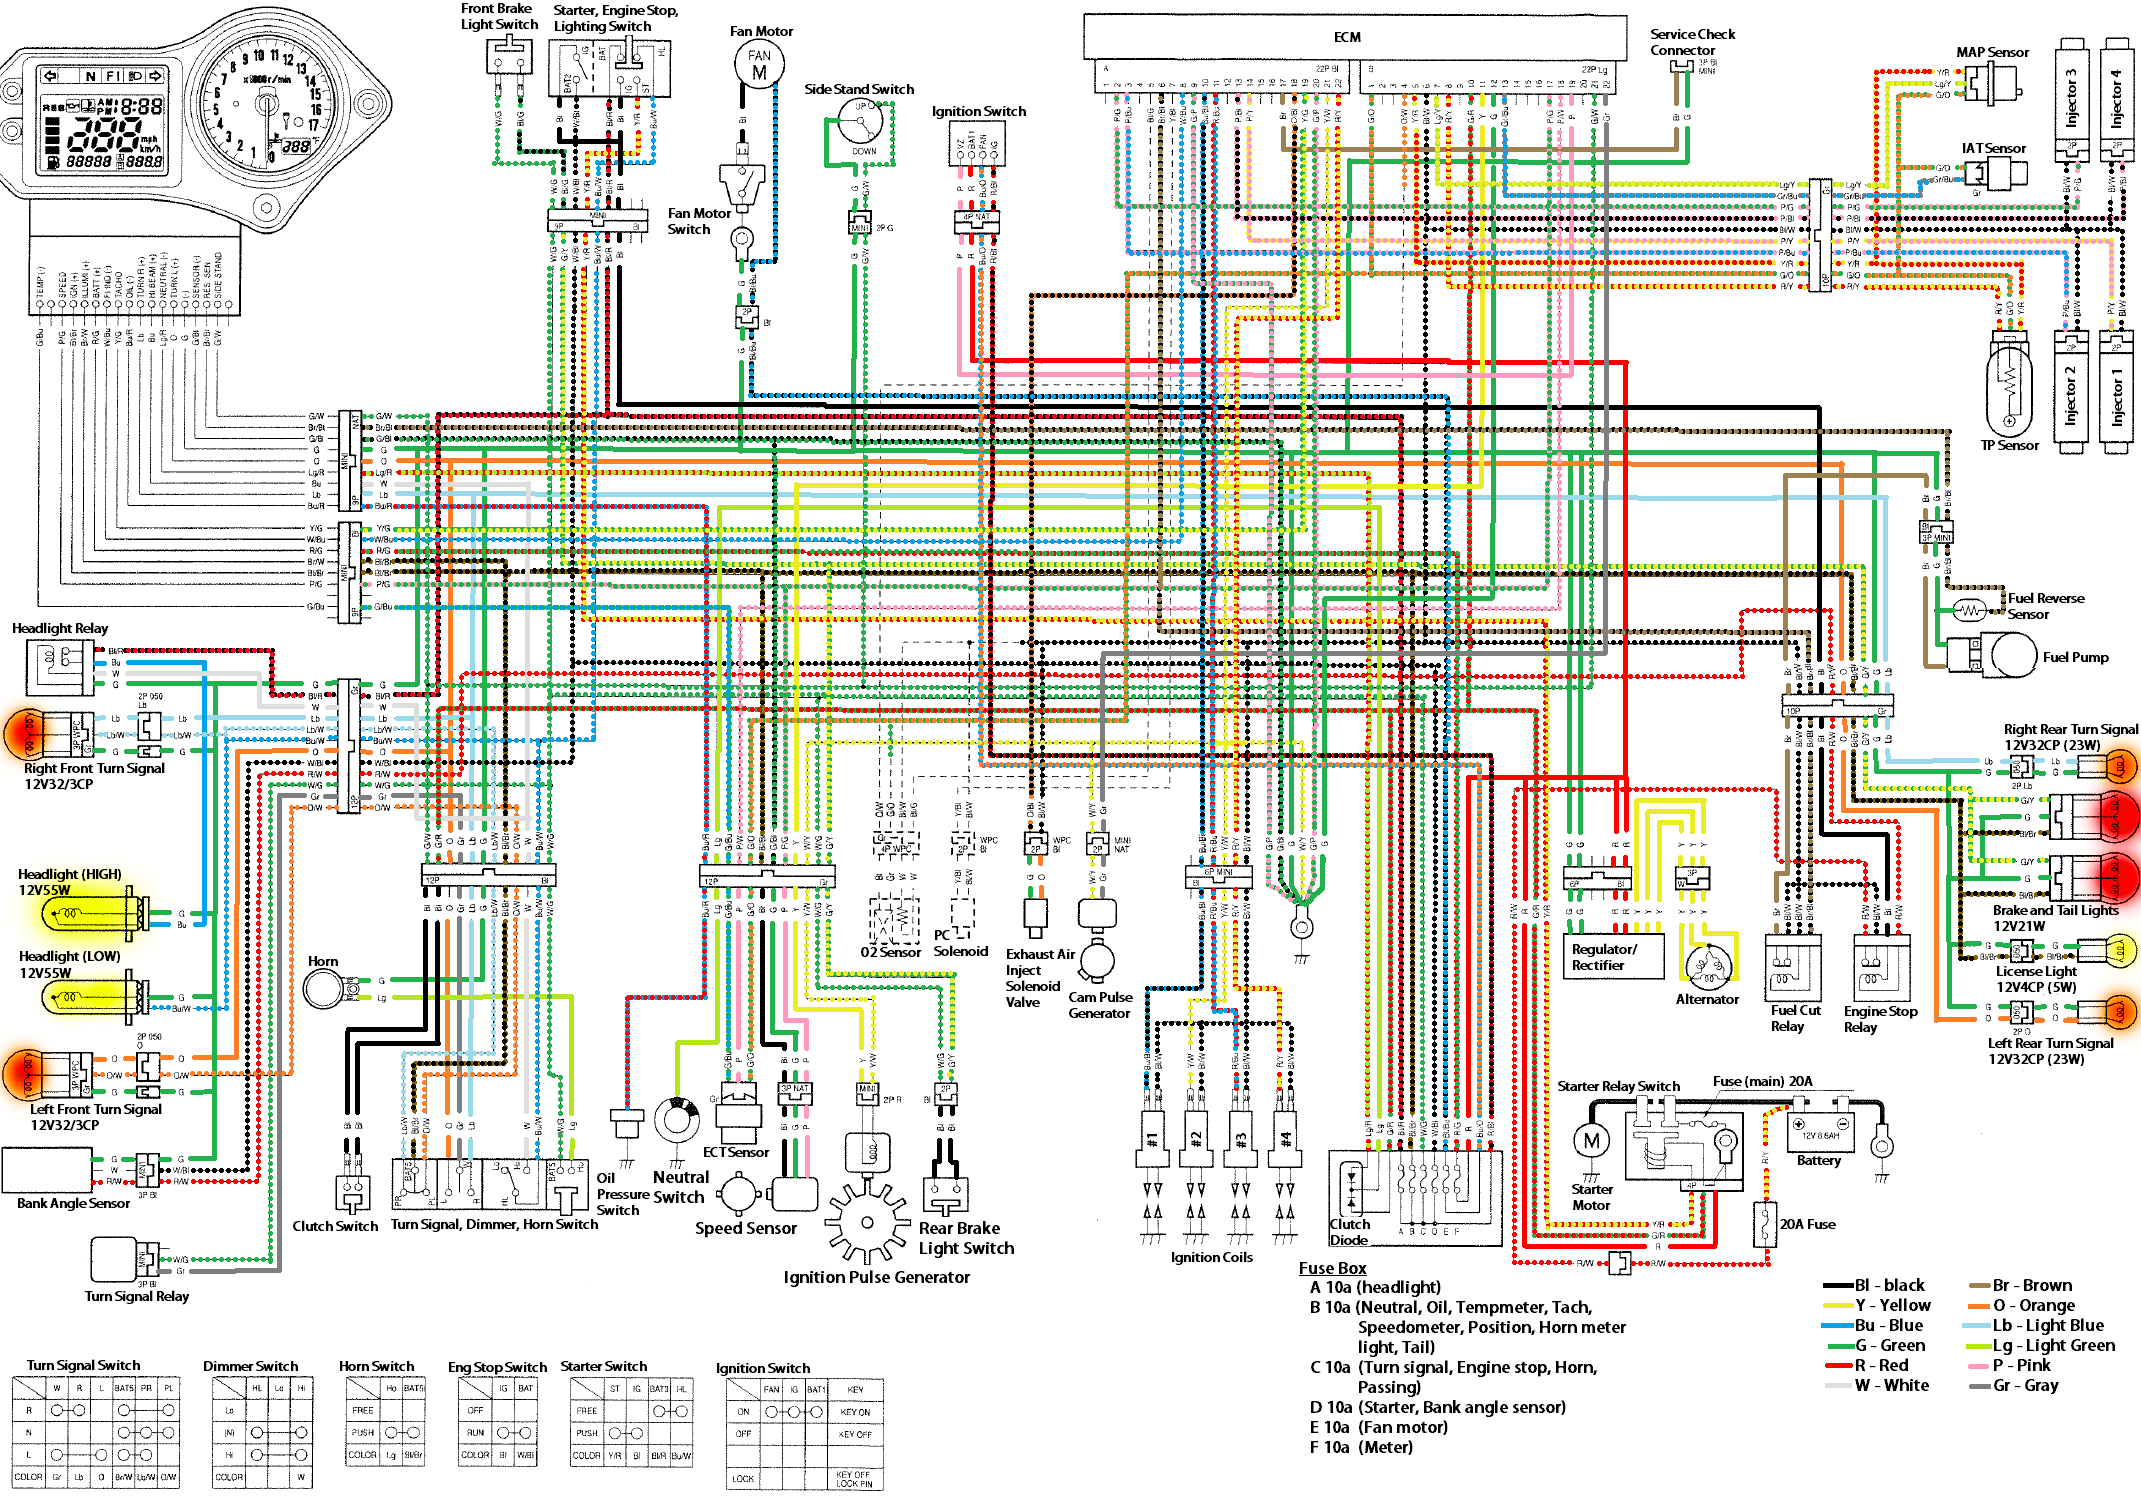 07 600rr wiring diagram